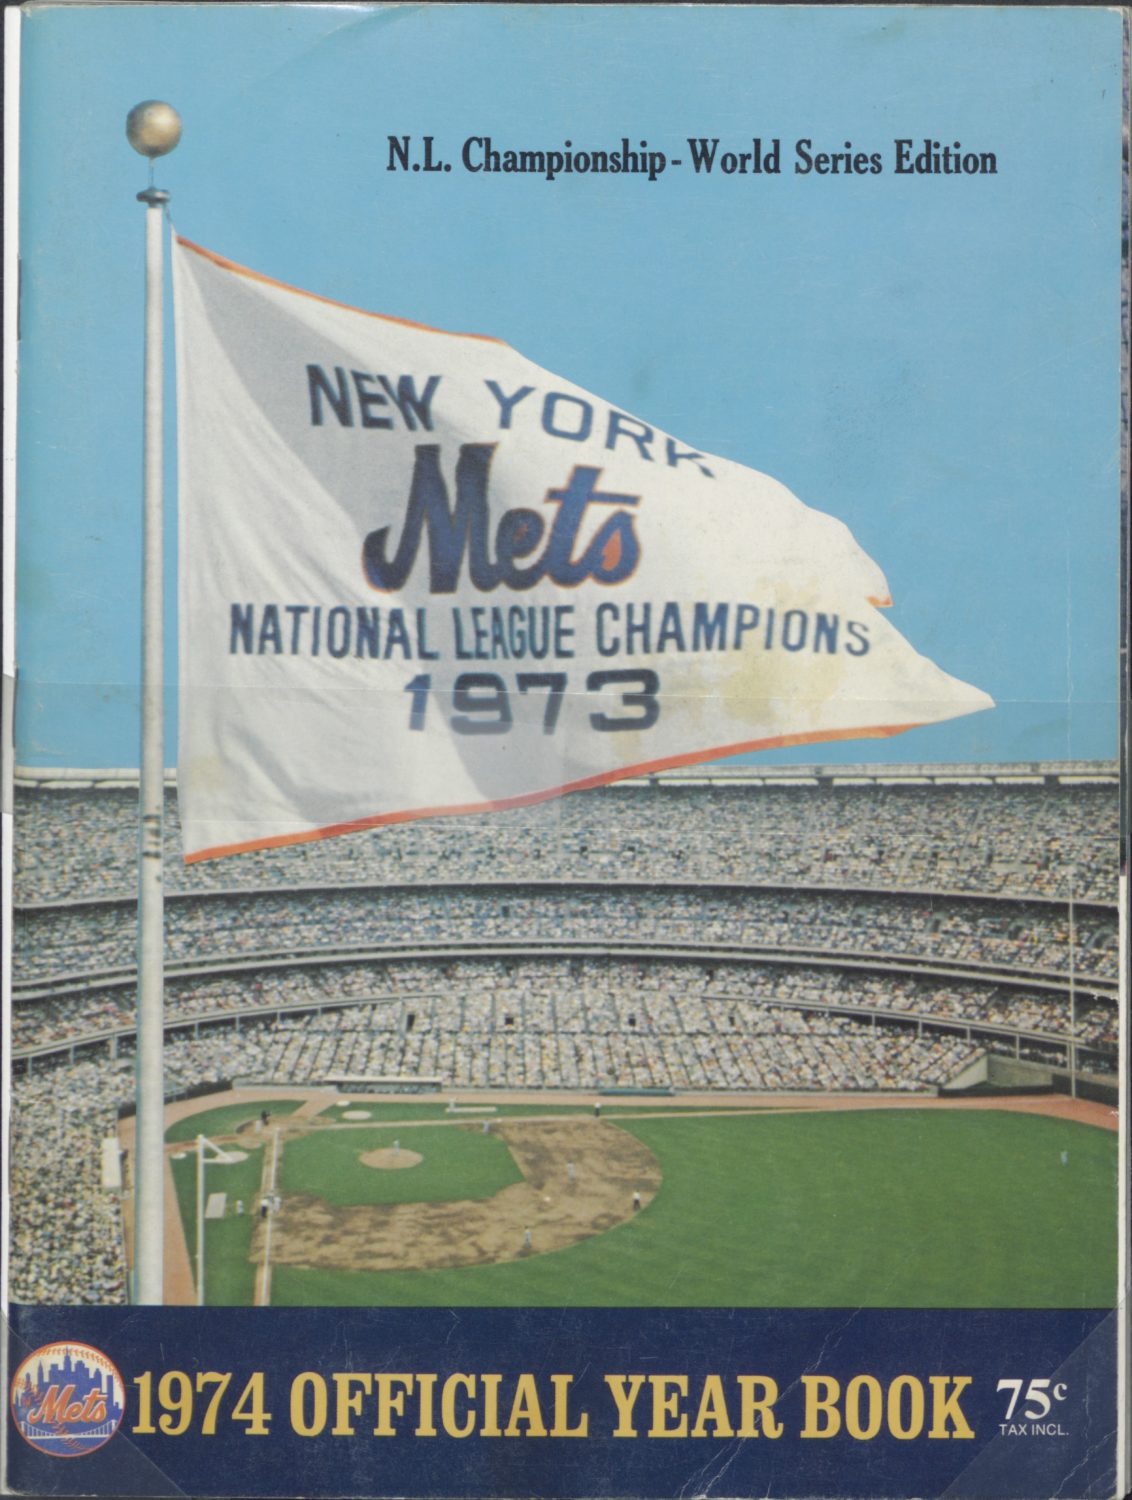 1974 New York Mets Yearbook: NLCS Pennant